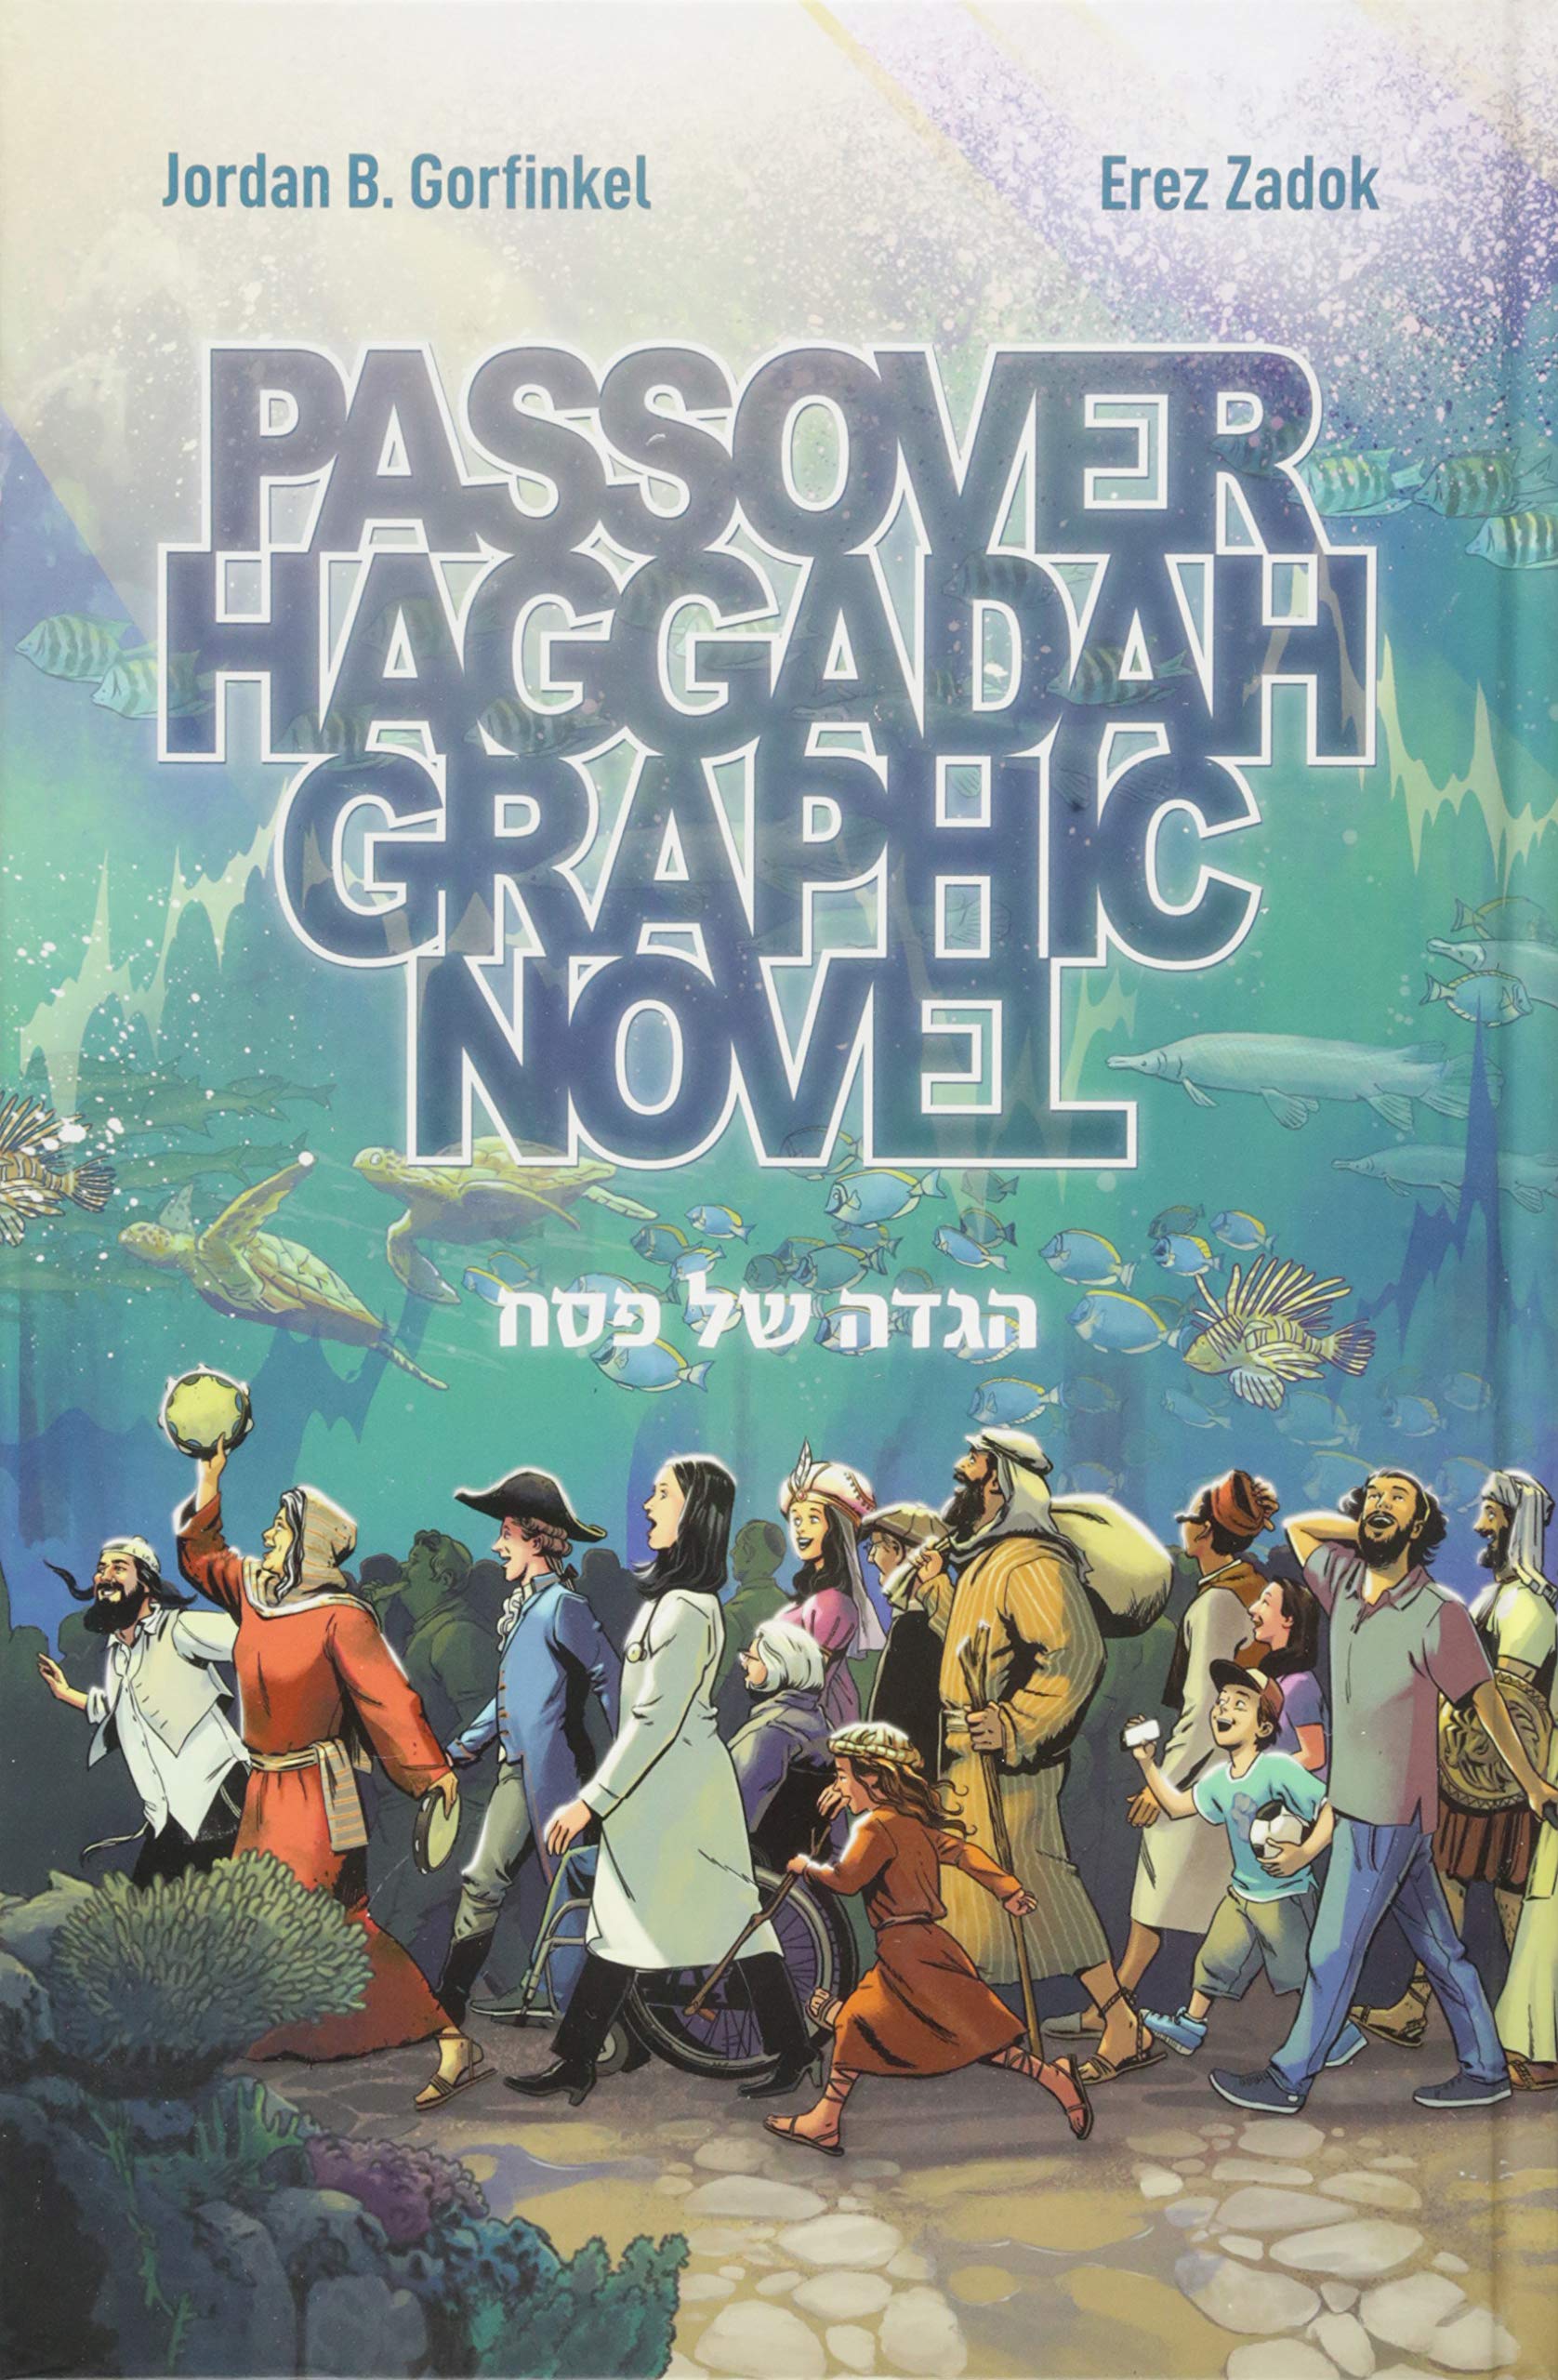 Best Comics of 2019: Passover Haggadah Graphic Novel